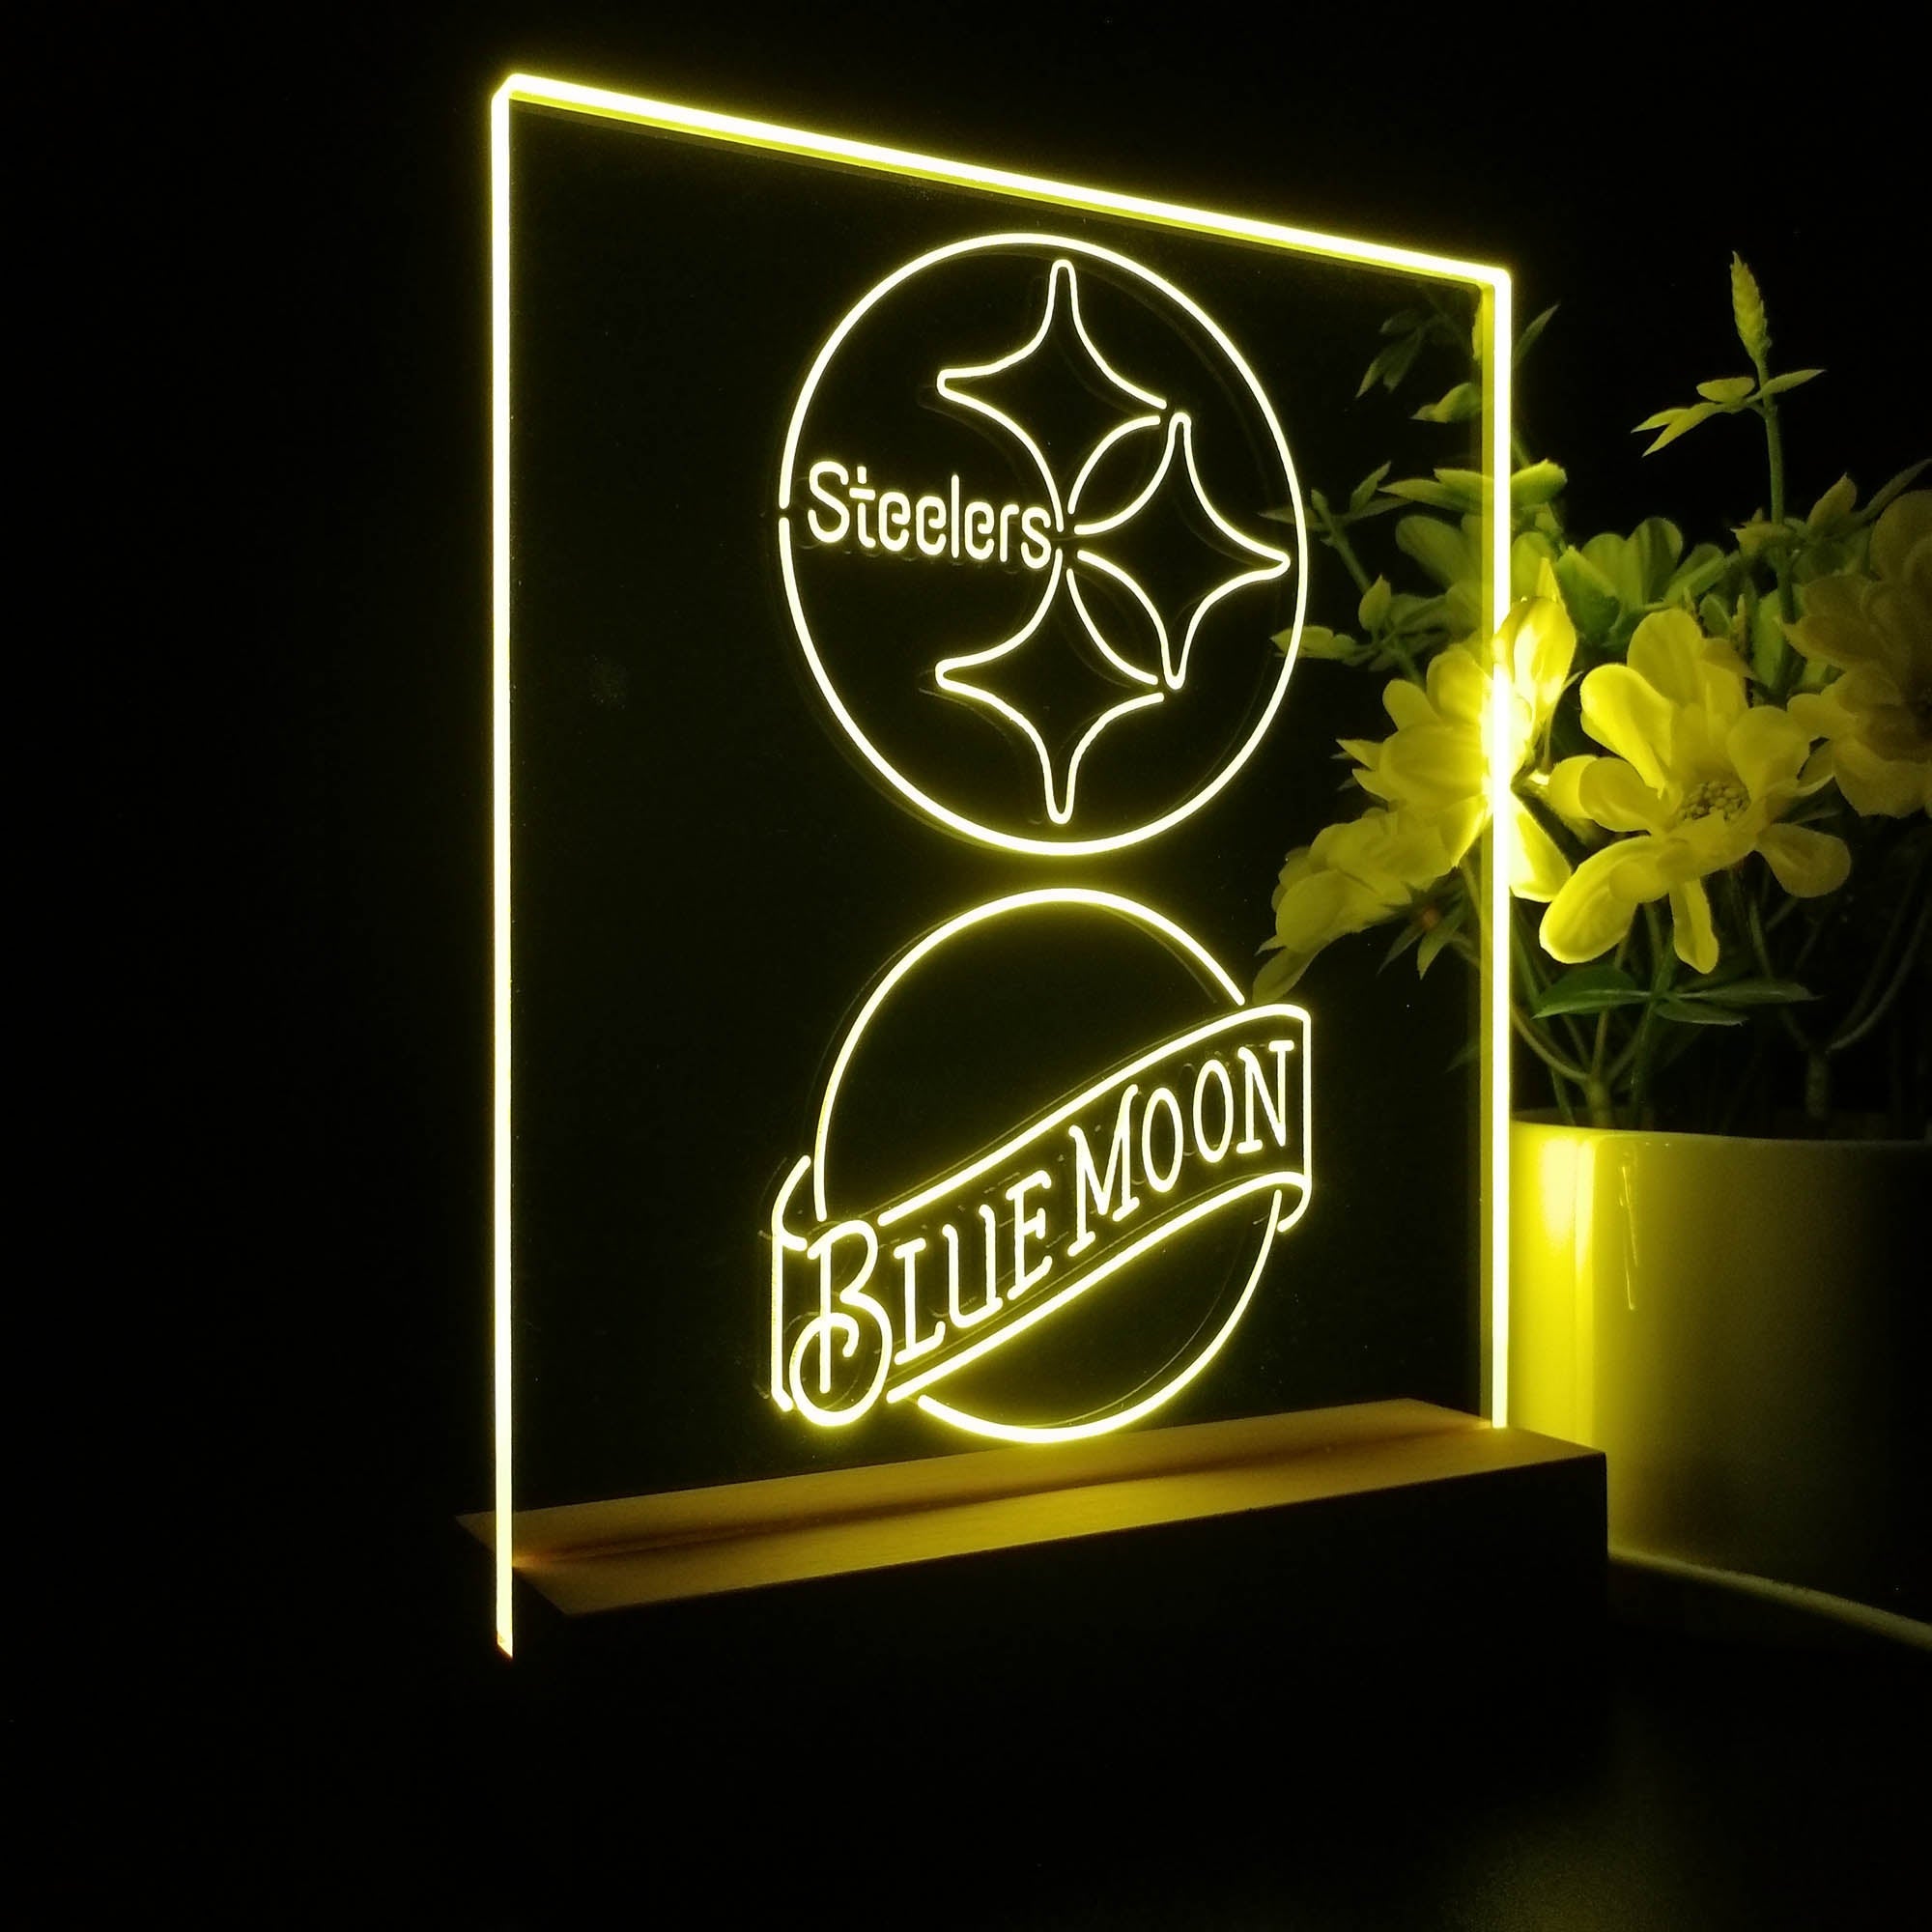 Pittsburgh Steelers Blue Moon Neon Sign Pub Bar Lamp